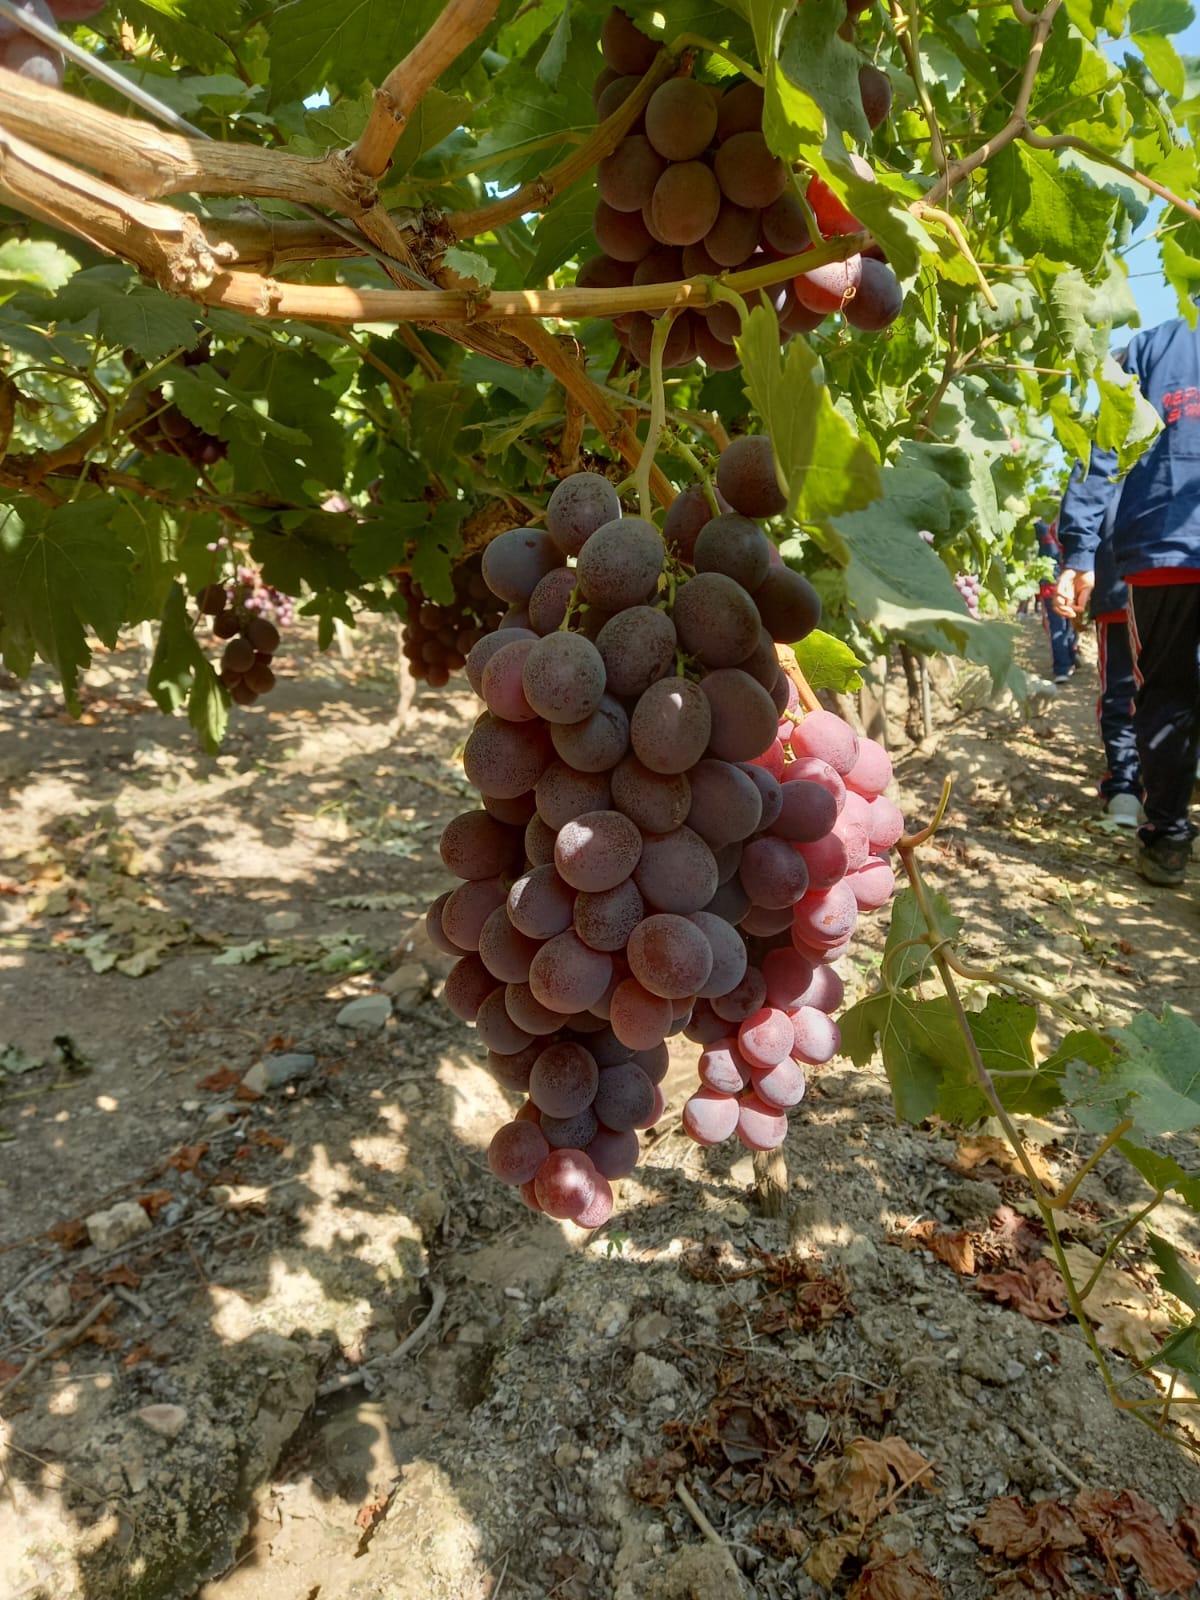 La Ruta del Vino en Tours a cascas desde Trujillo